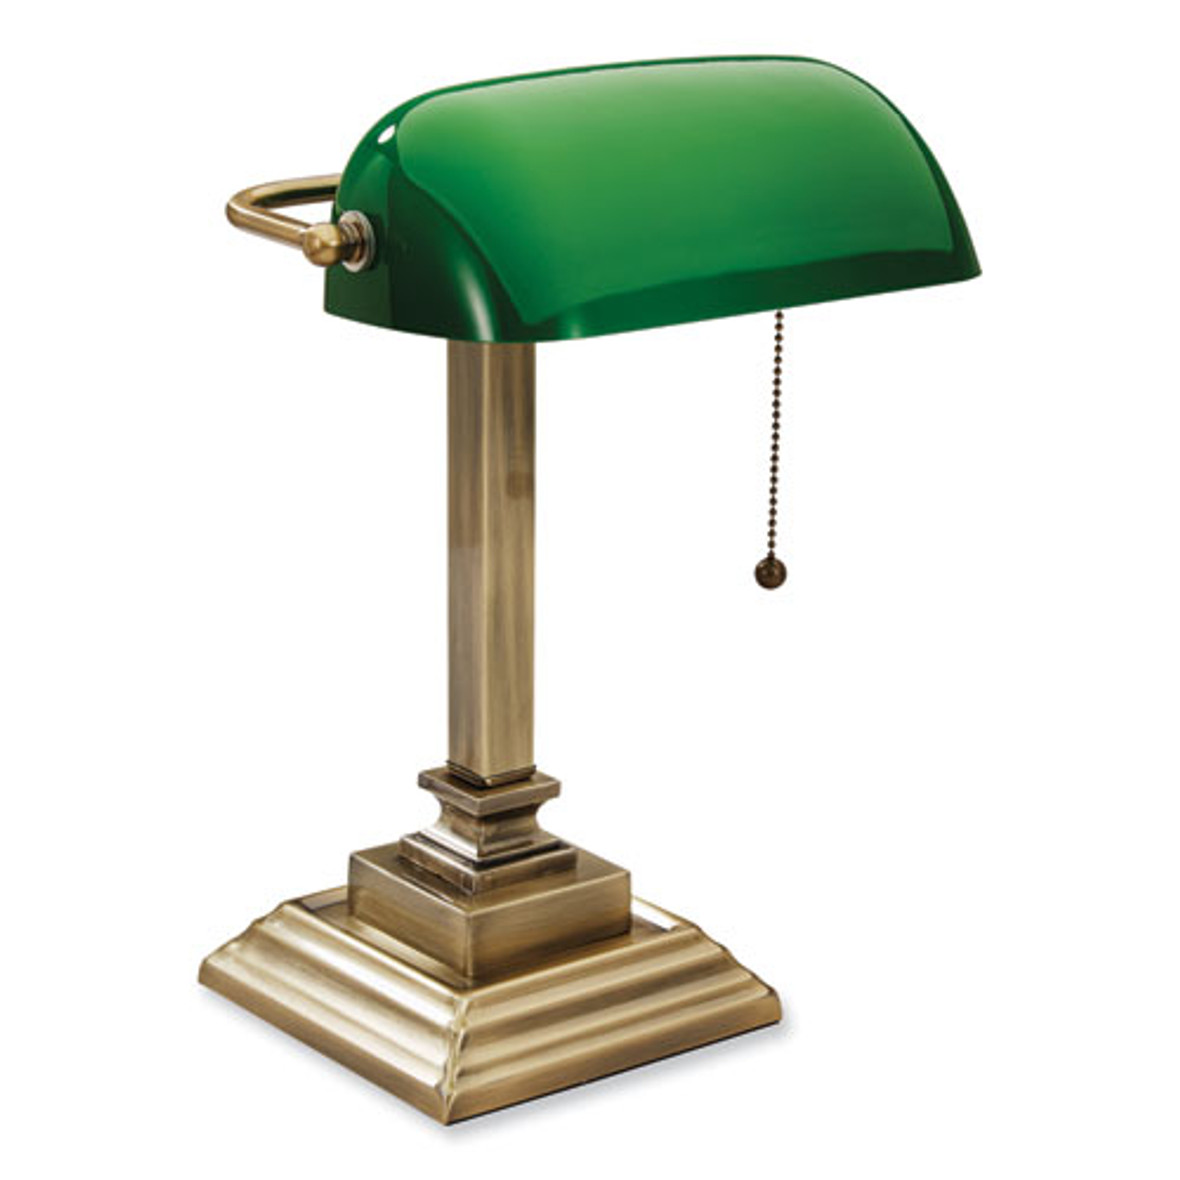 V-Light LED Banker's Lamp With Green Shade, USB Charging Port, Candlestick Neck, 15" High, Antique Brass